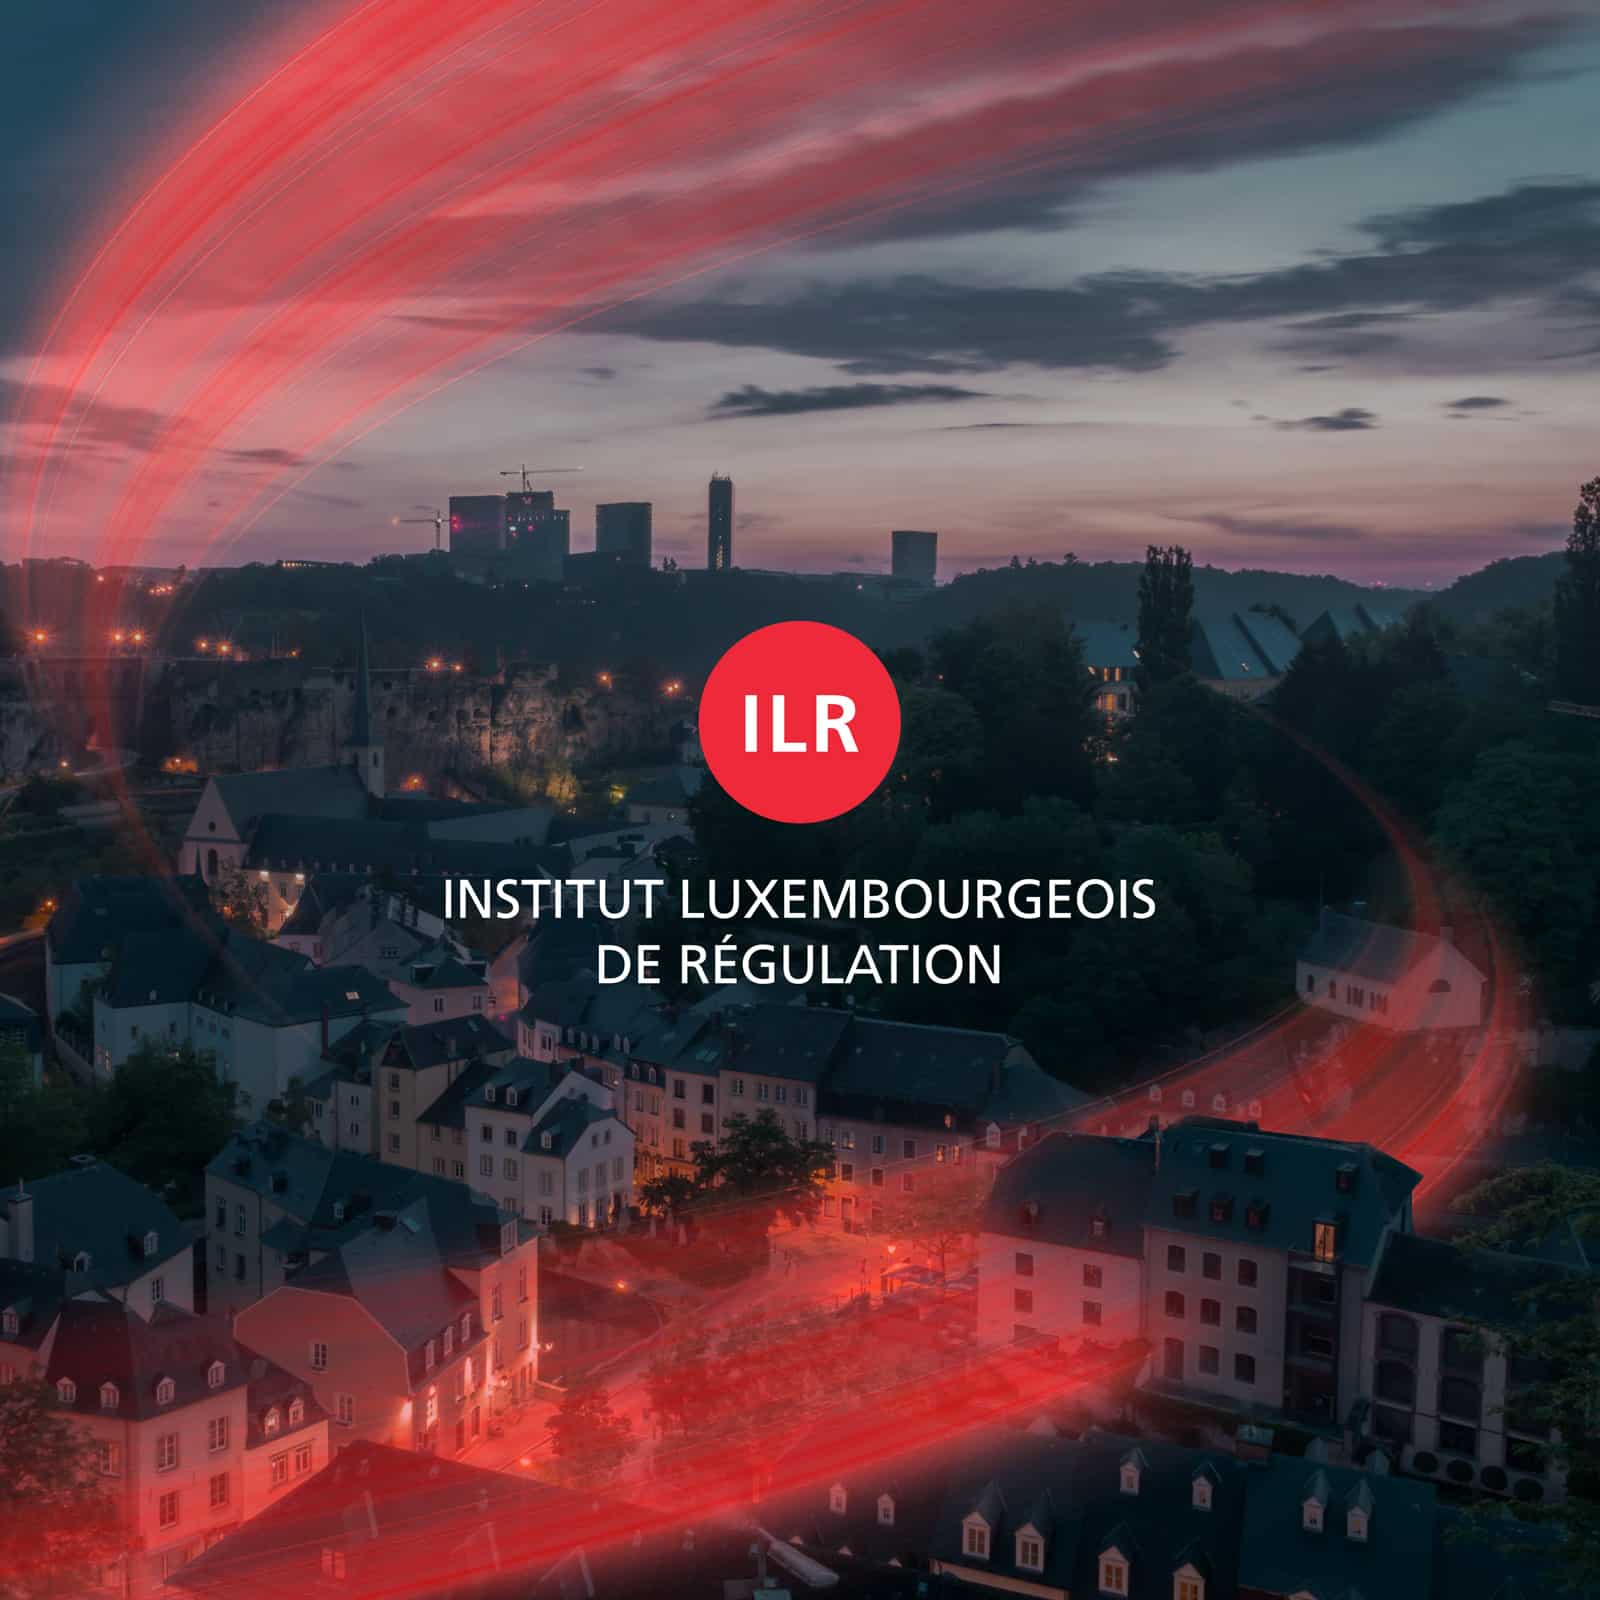 ILR (Institut Luxembourgeois de Régulation)